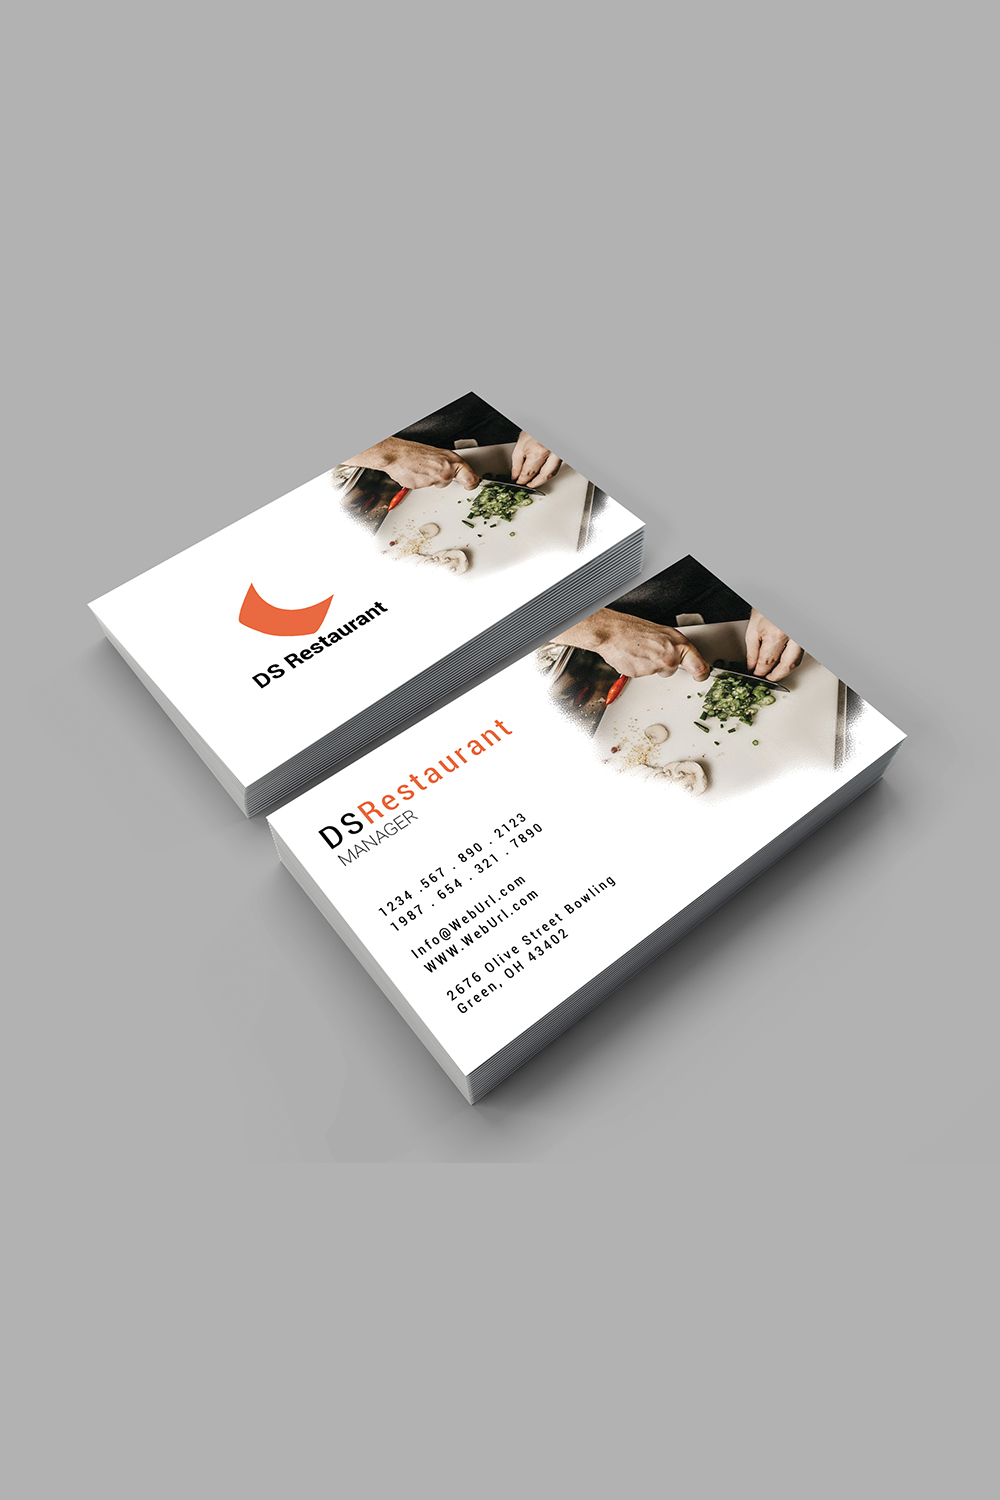 Restautrant business card design pinterest preview image.